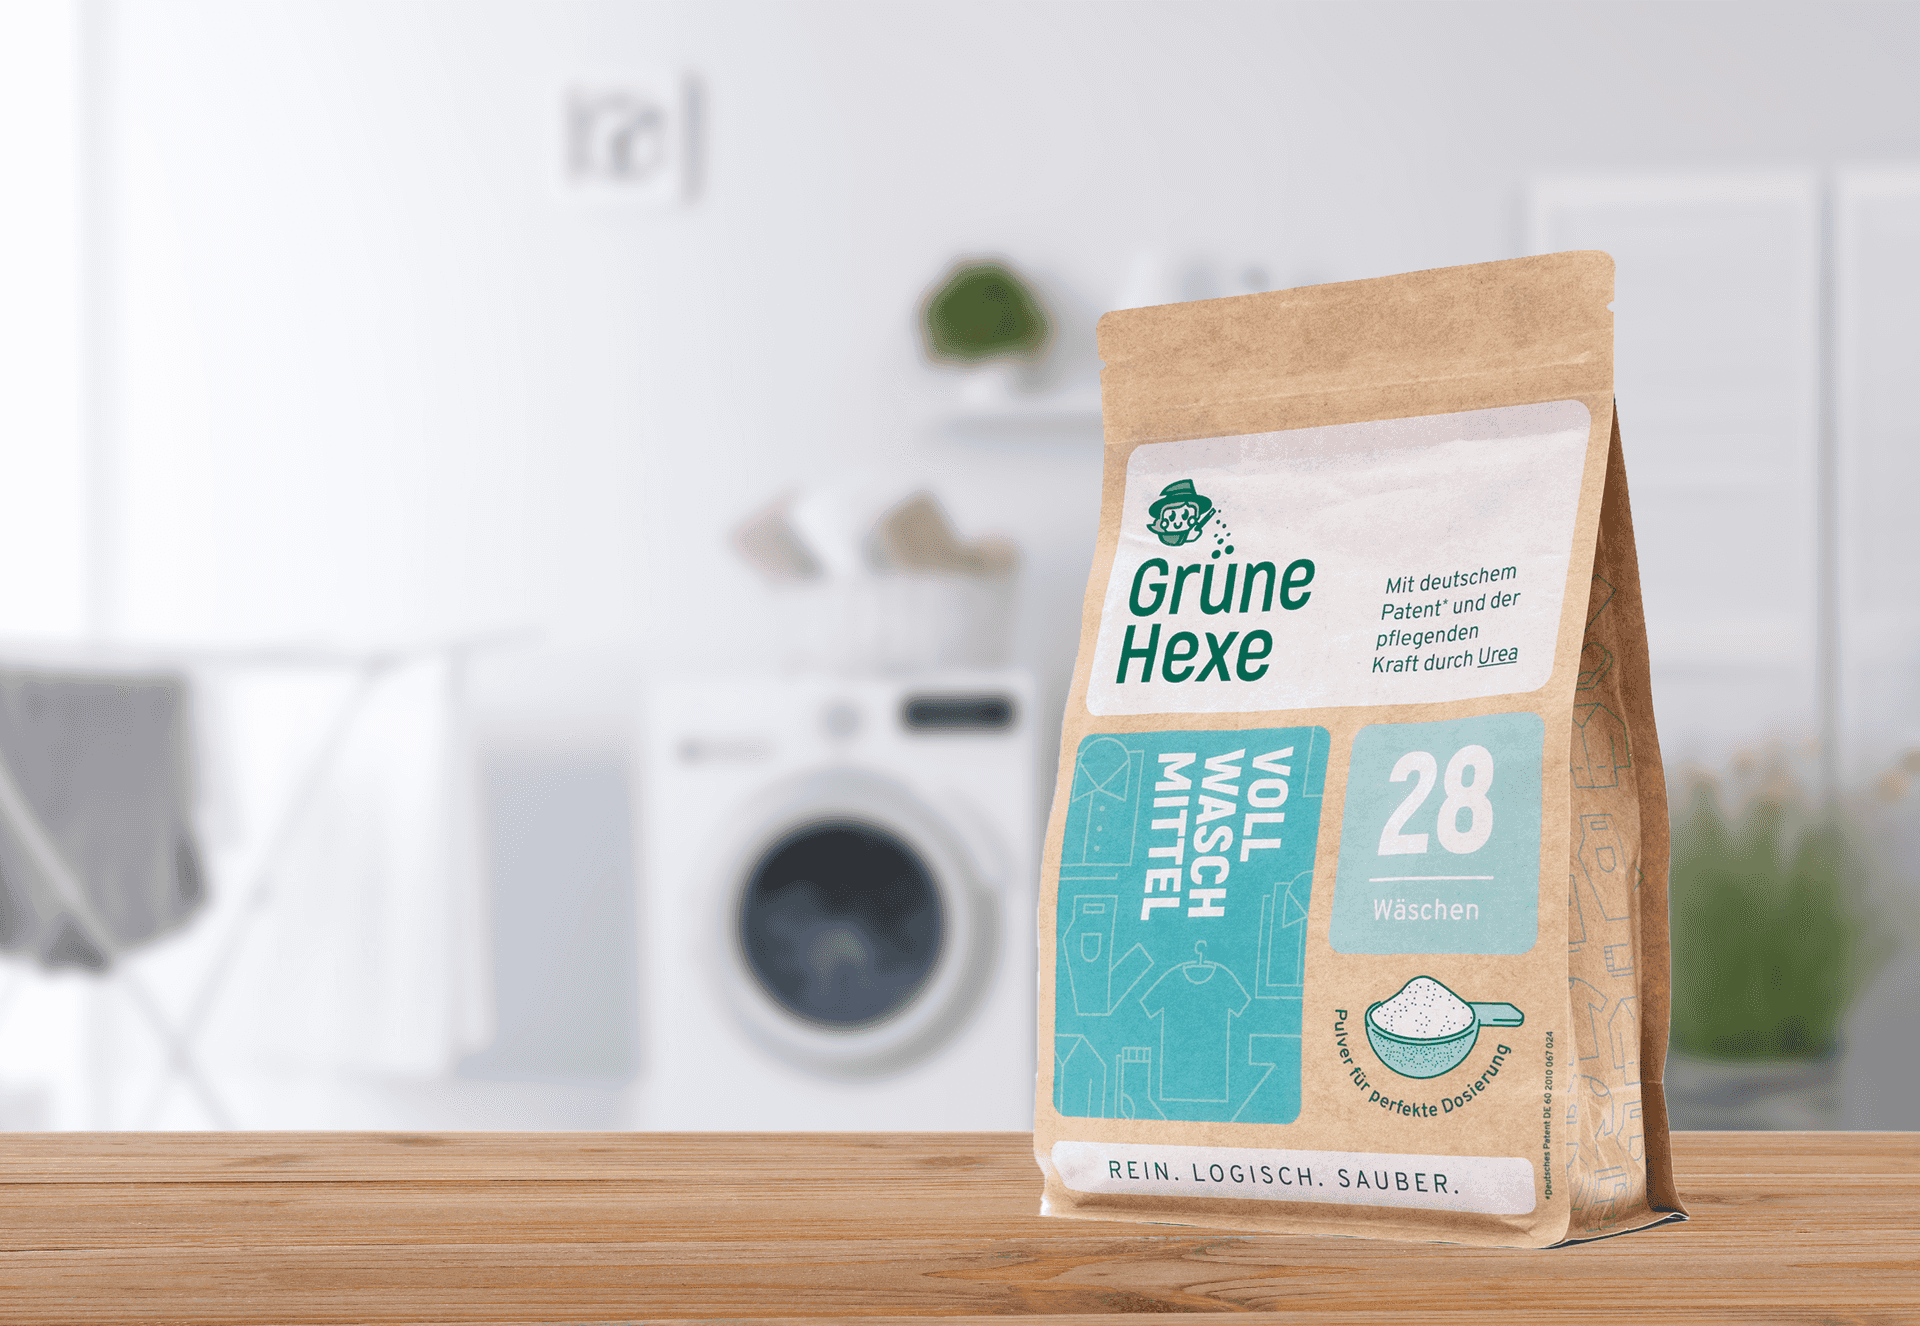 Hexe Laundry Detergent - Grüne